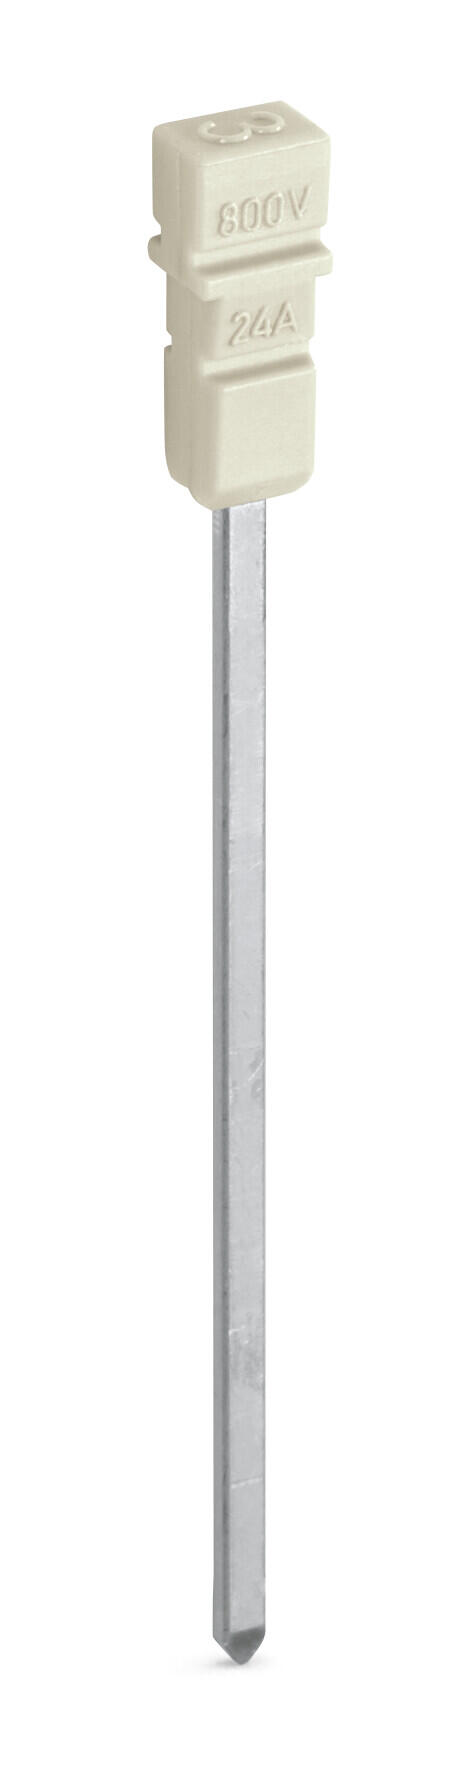 WAGO Vertical jumper insulated light gray